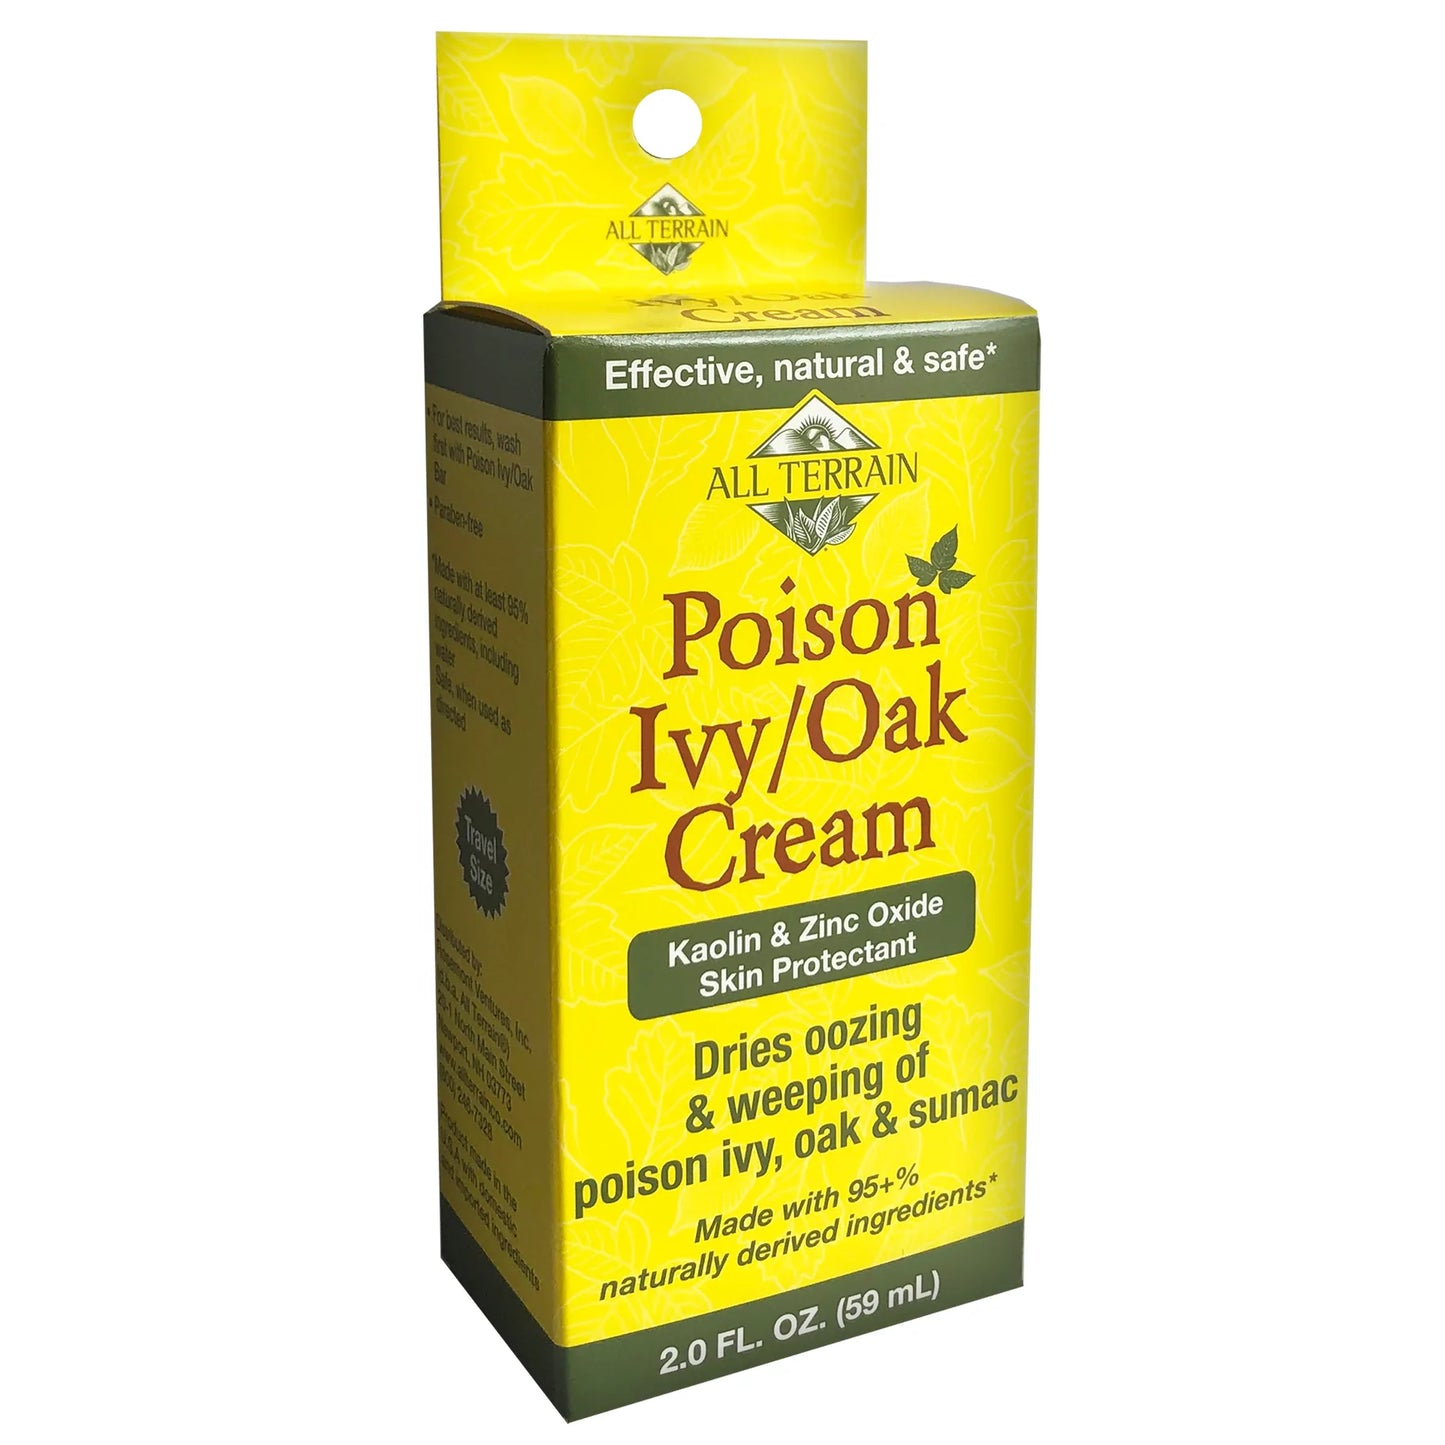 All Terrain Poison Ivy/Oak Cream